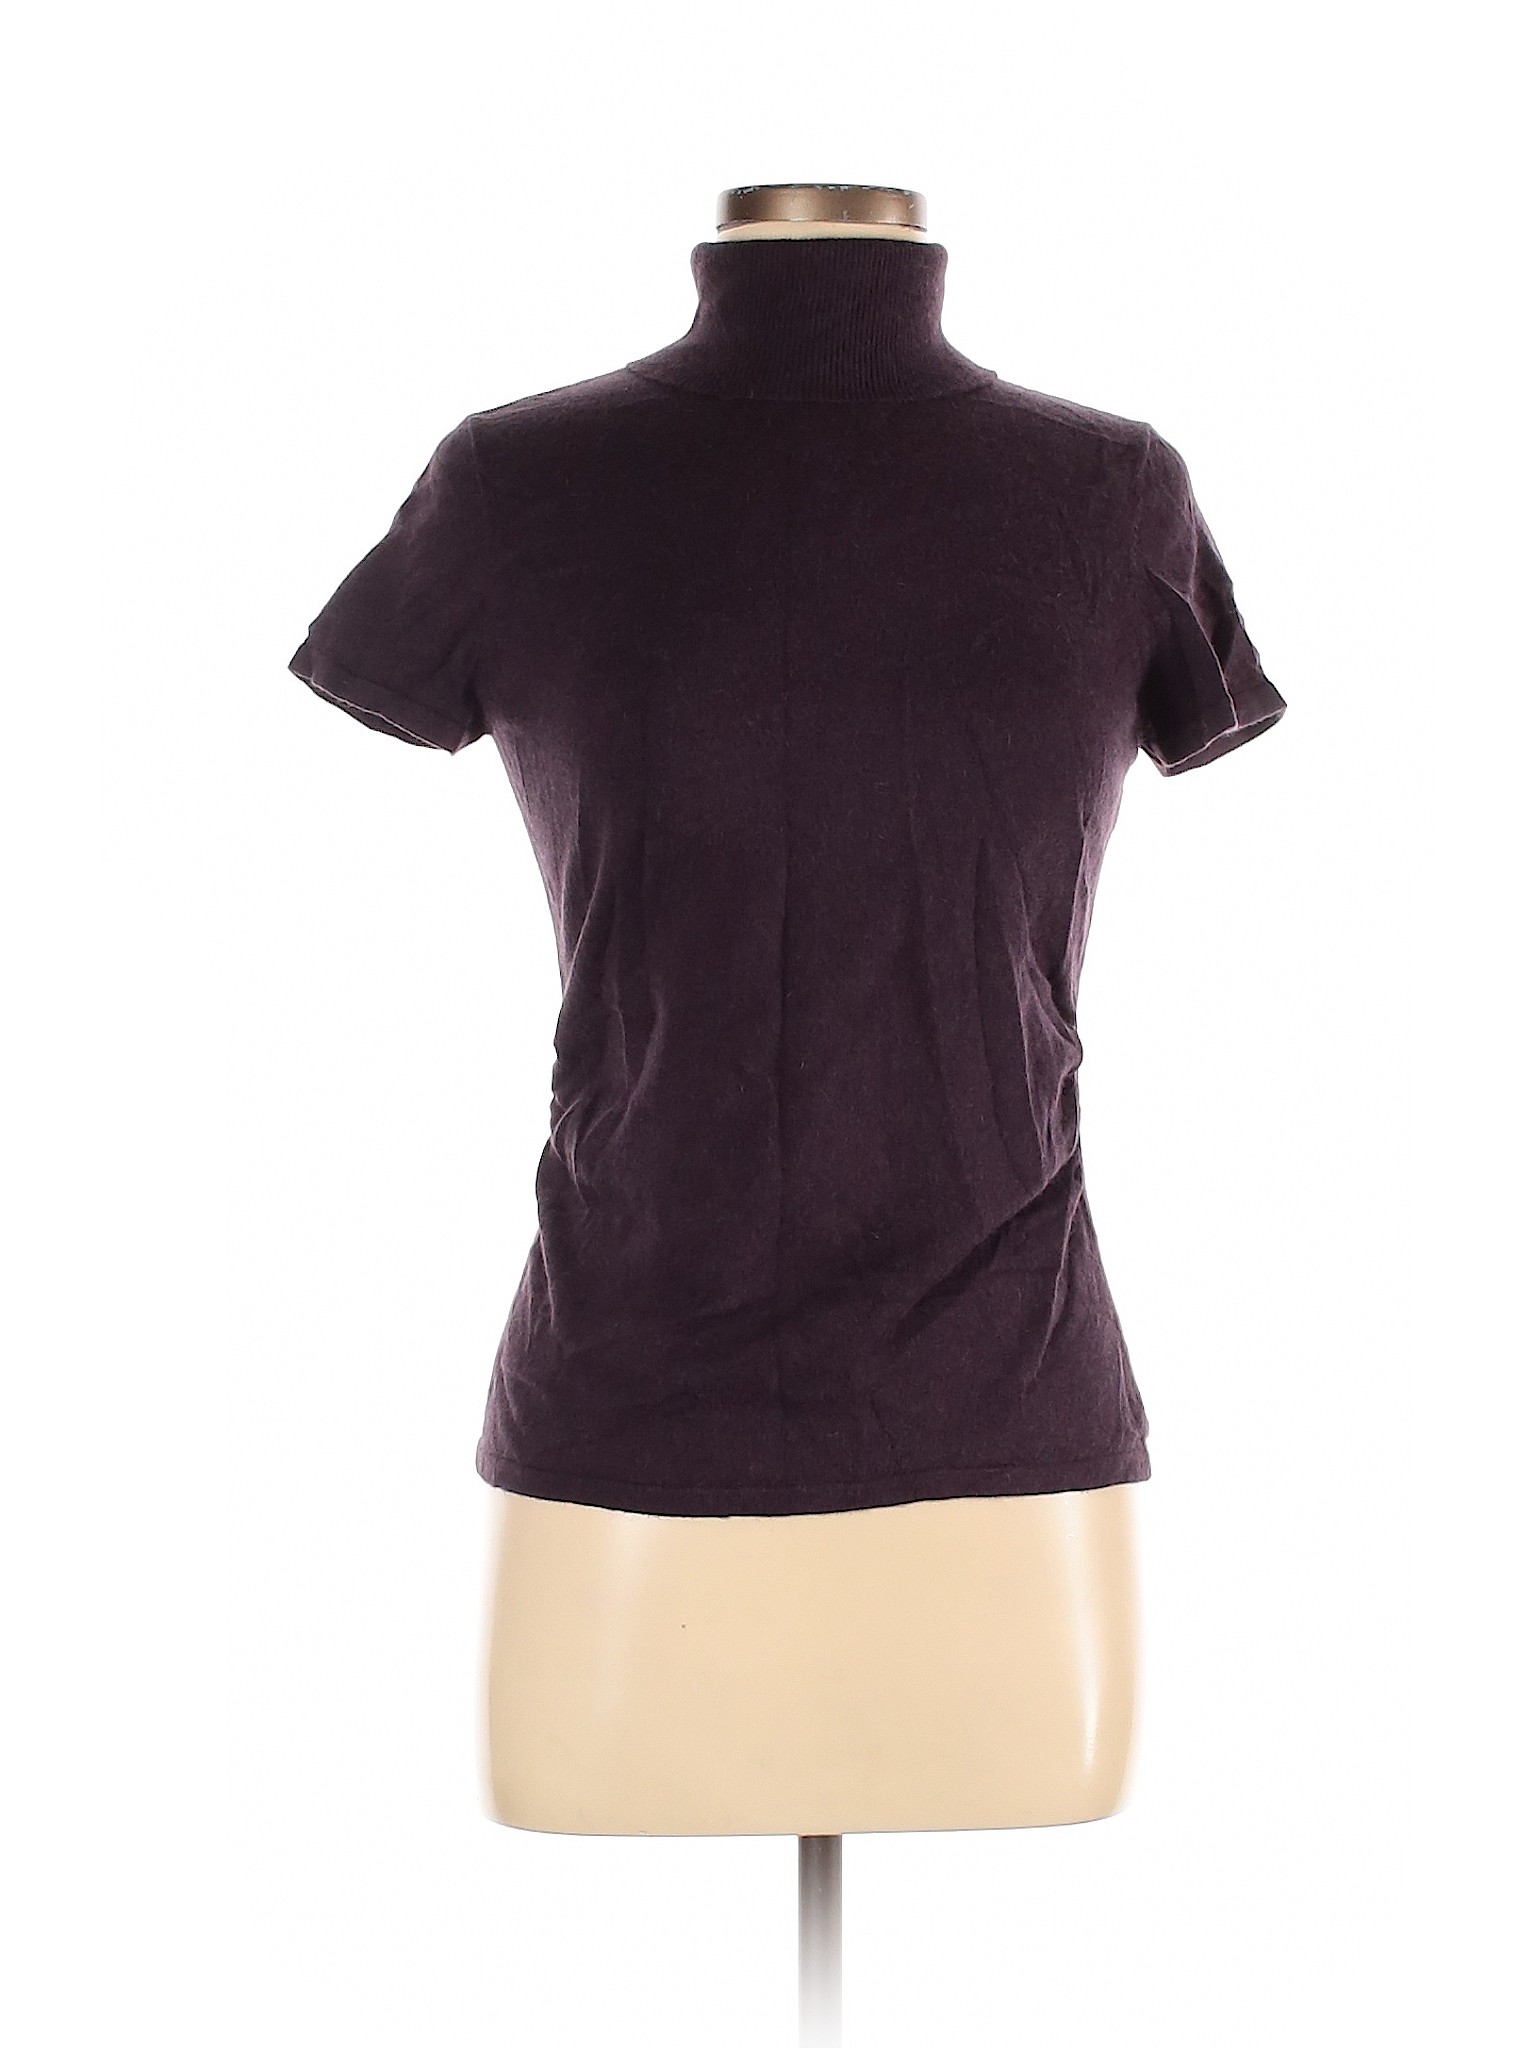 Ann Taylor Women Purple Turtleneck Sweater M Petites | eBay